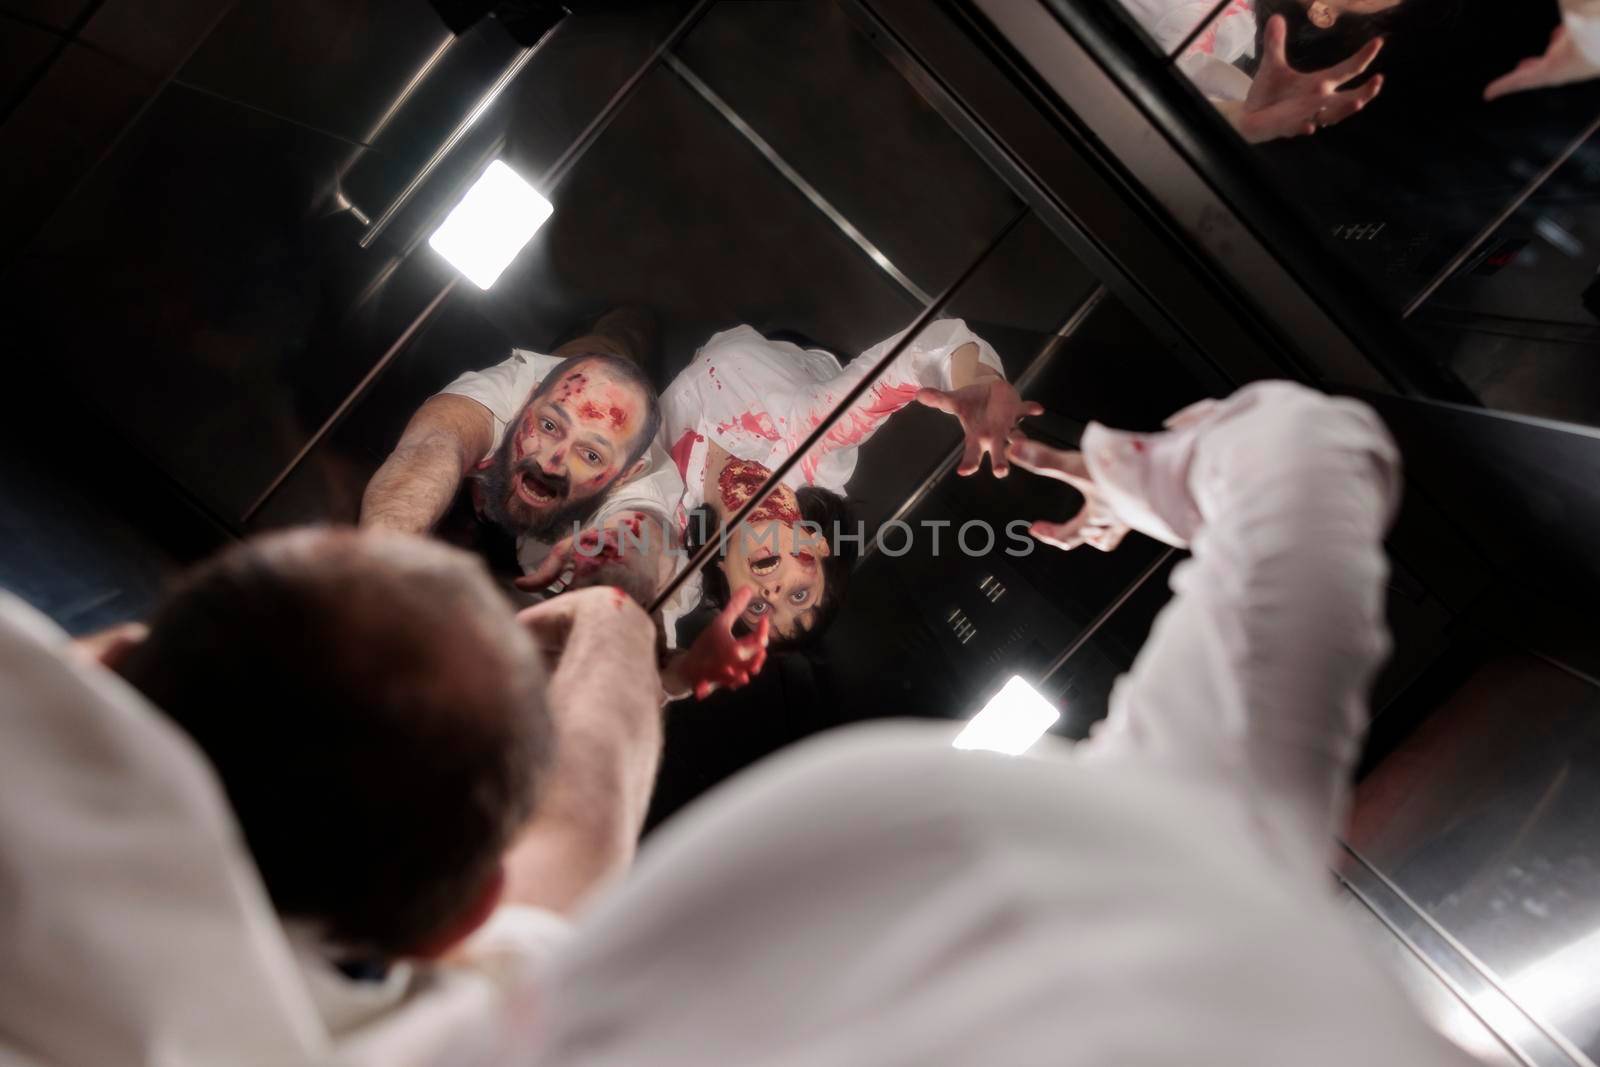 Walking dead evil corpses in elevator by DCStudio